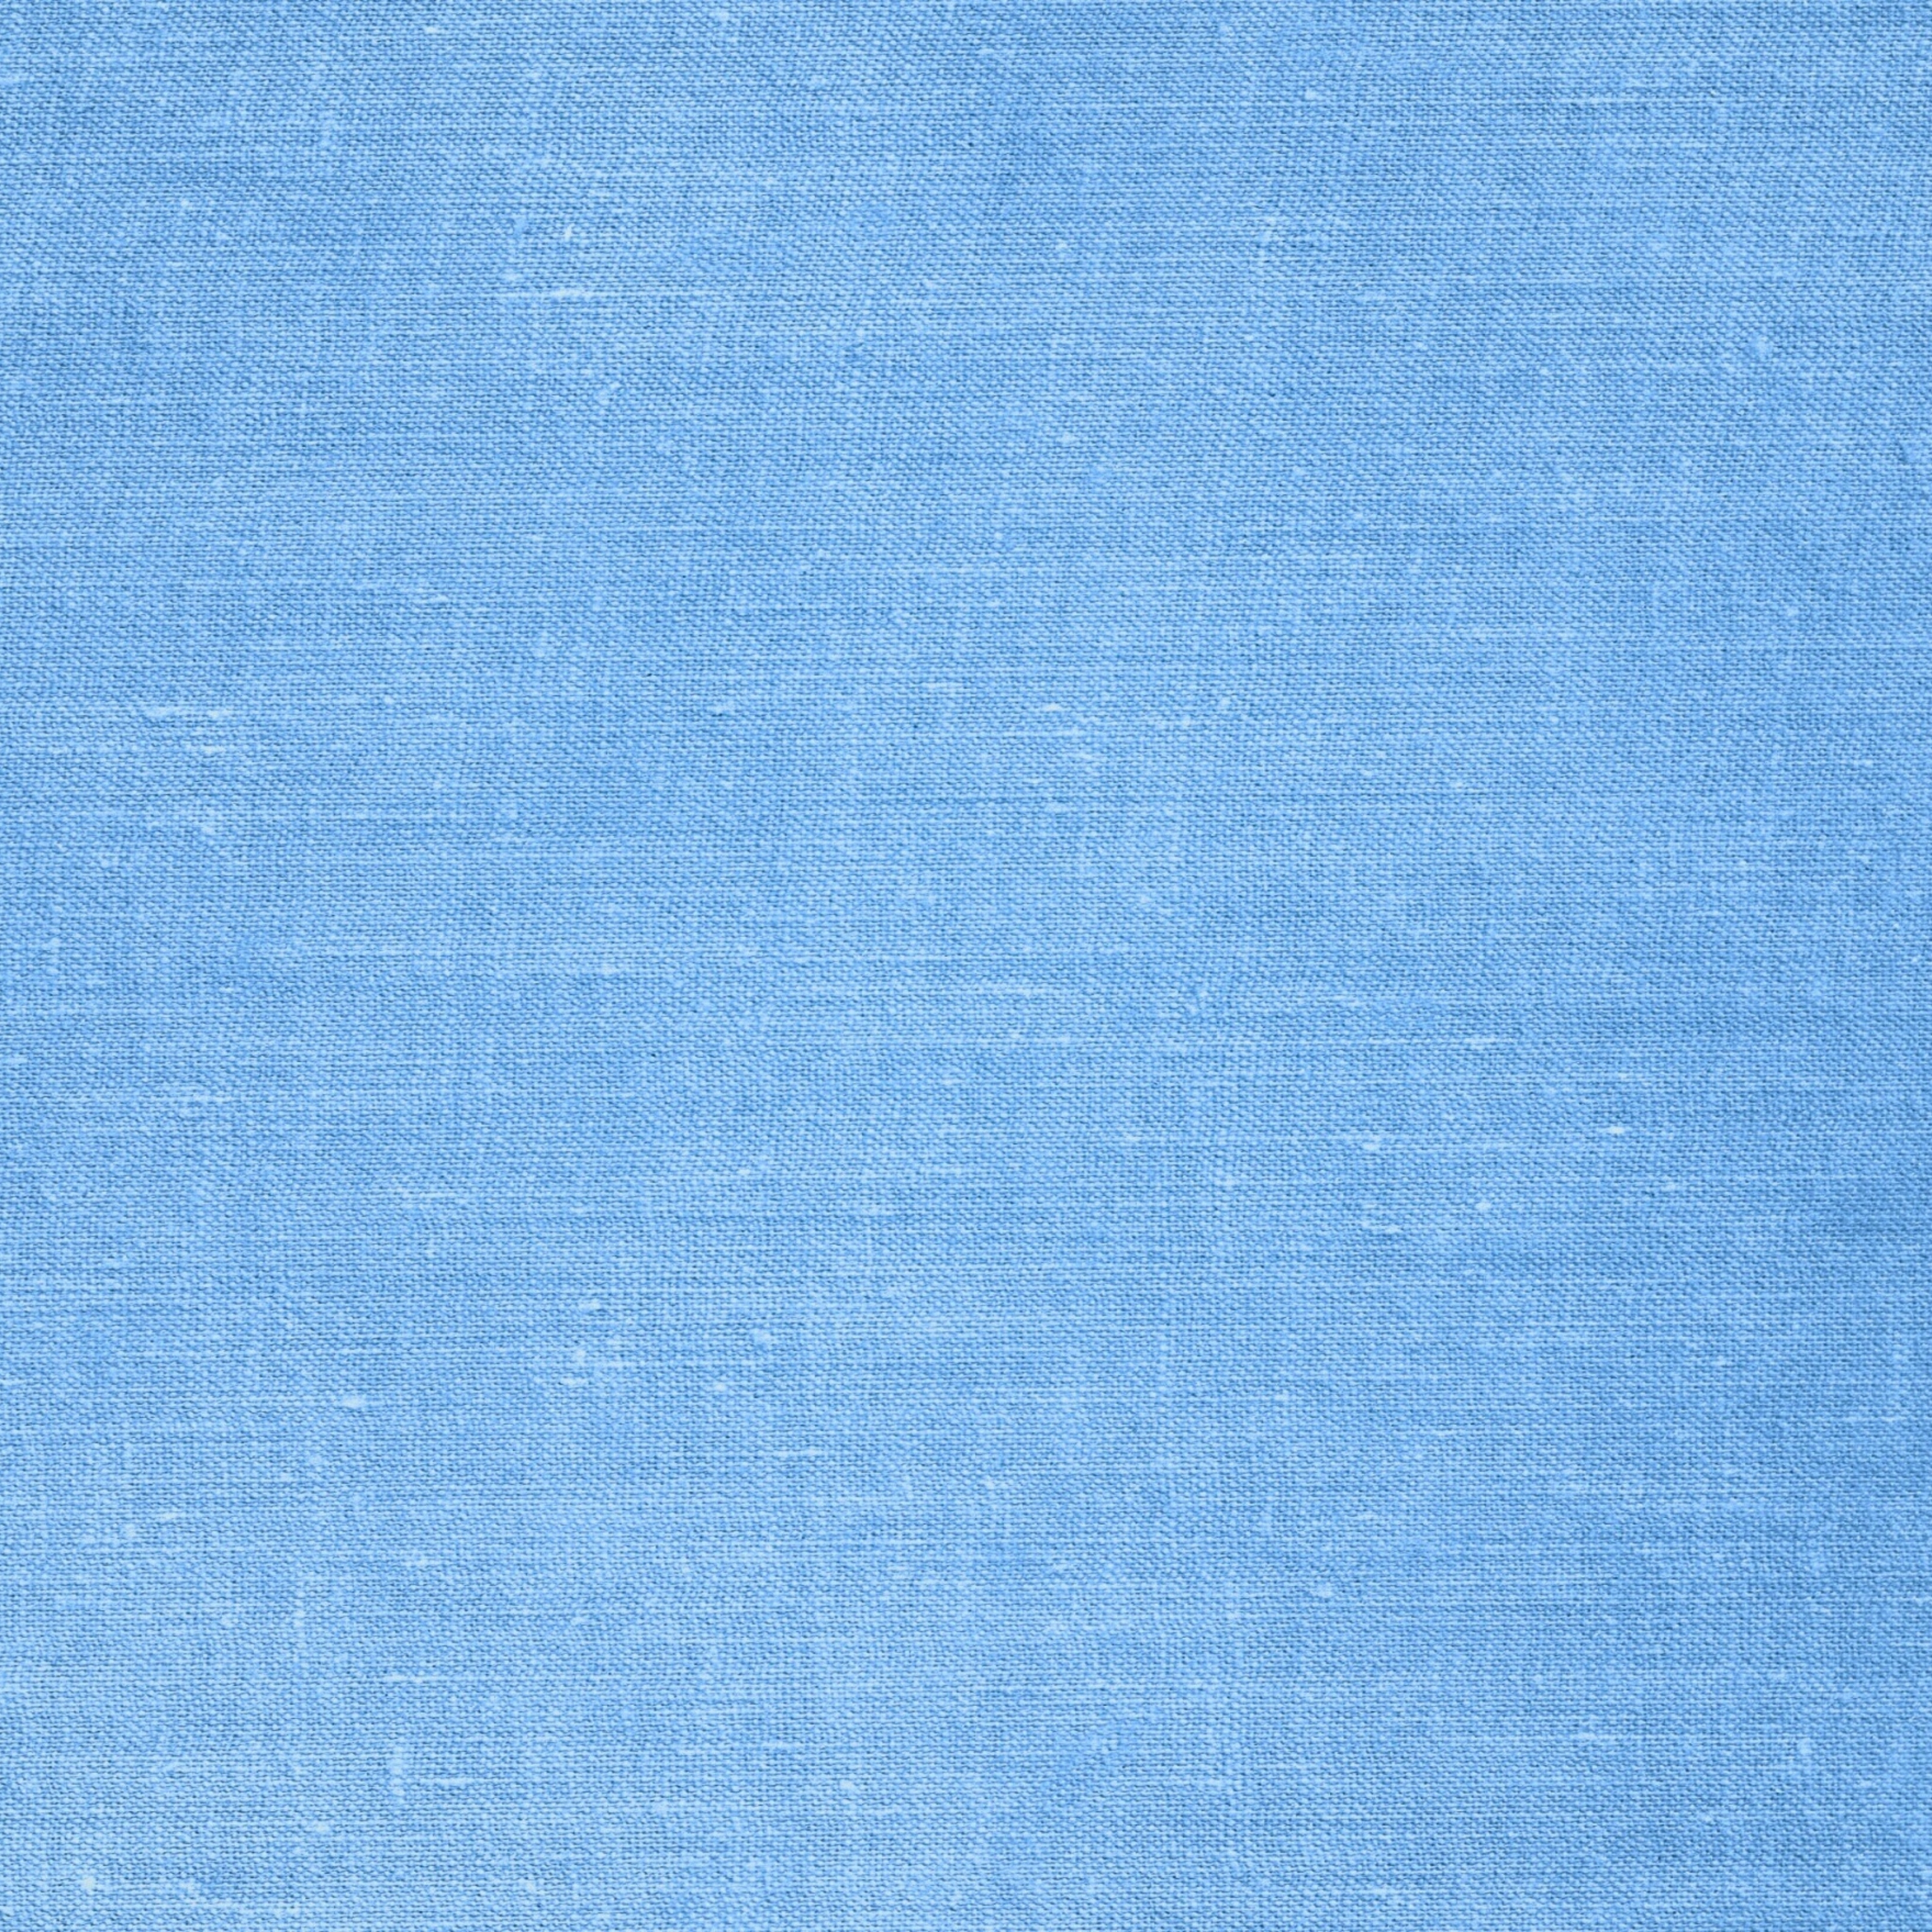 Blue Fine Fabric Background iPad Wallpaper